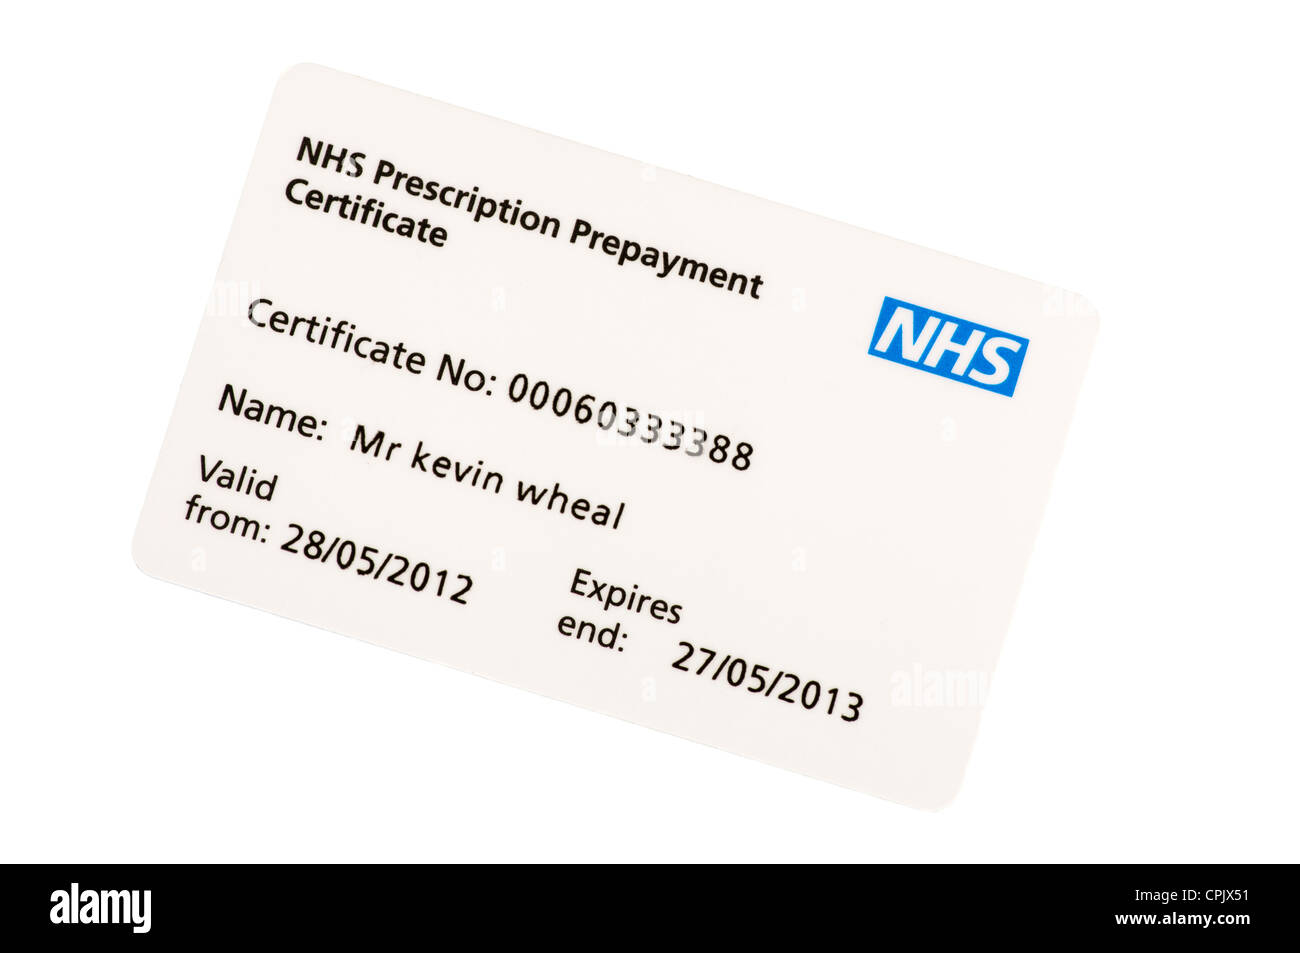 nhs-prescription-prepayment-certificate-stock-photo-alamy